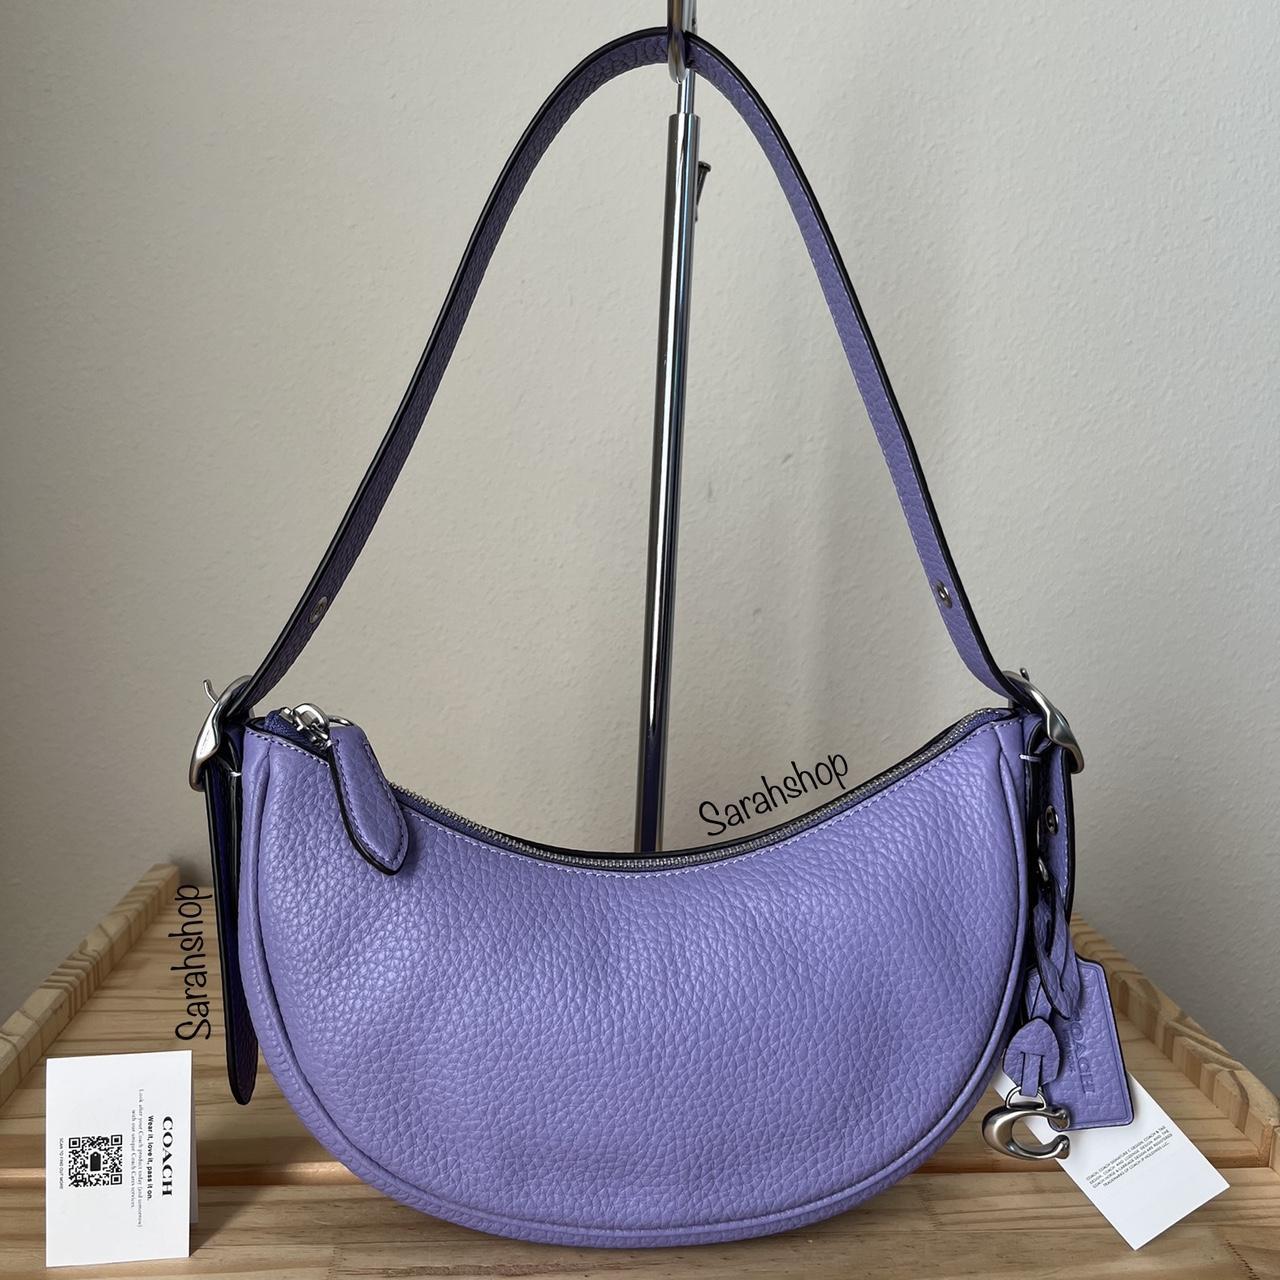 Coach | Bags | New Coach Poppy Handbag In Light Lilacviolet Purple |  Poshmark